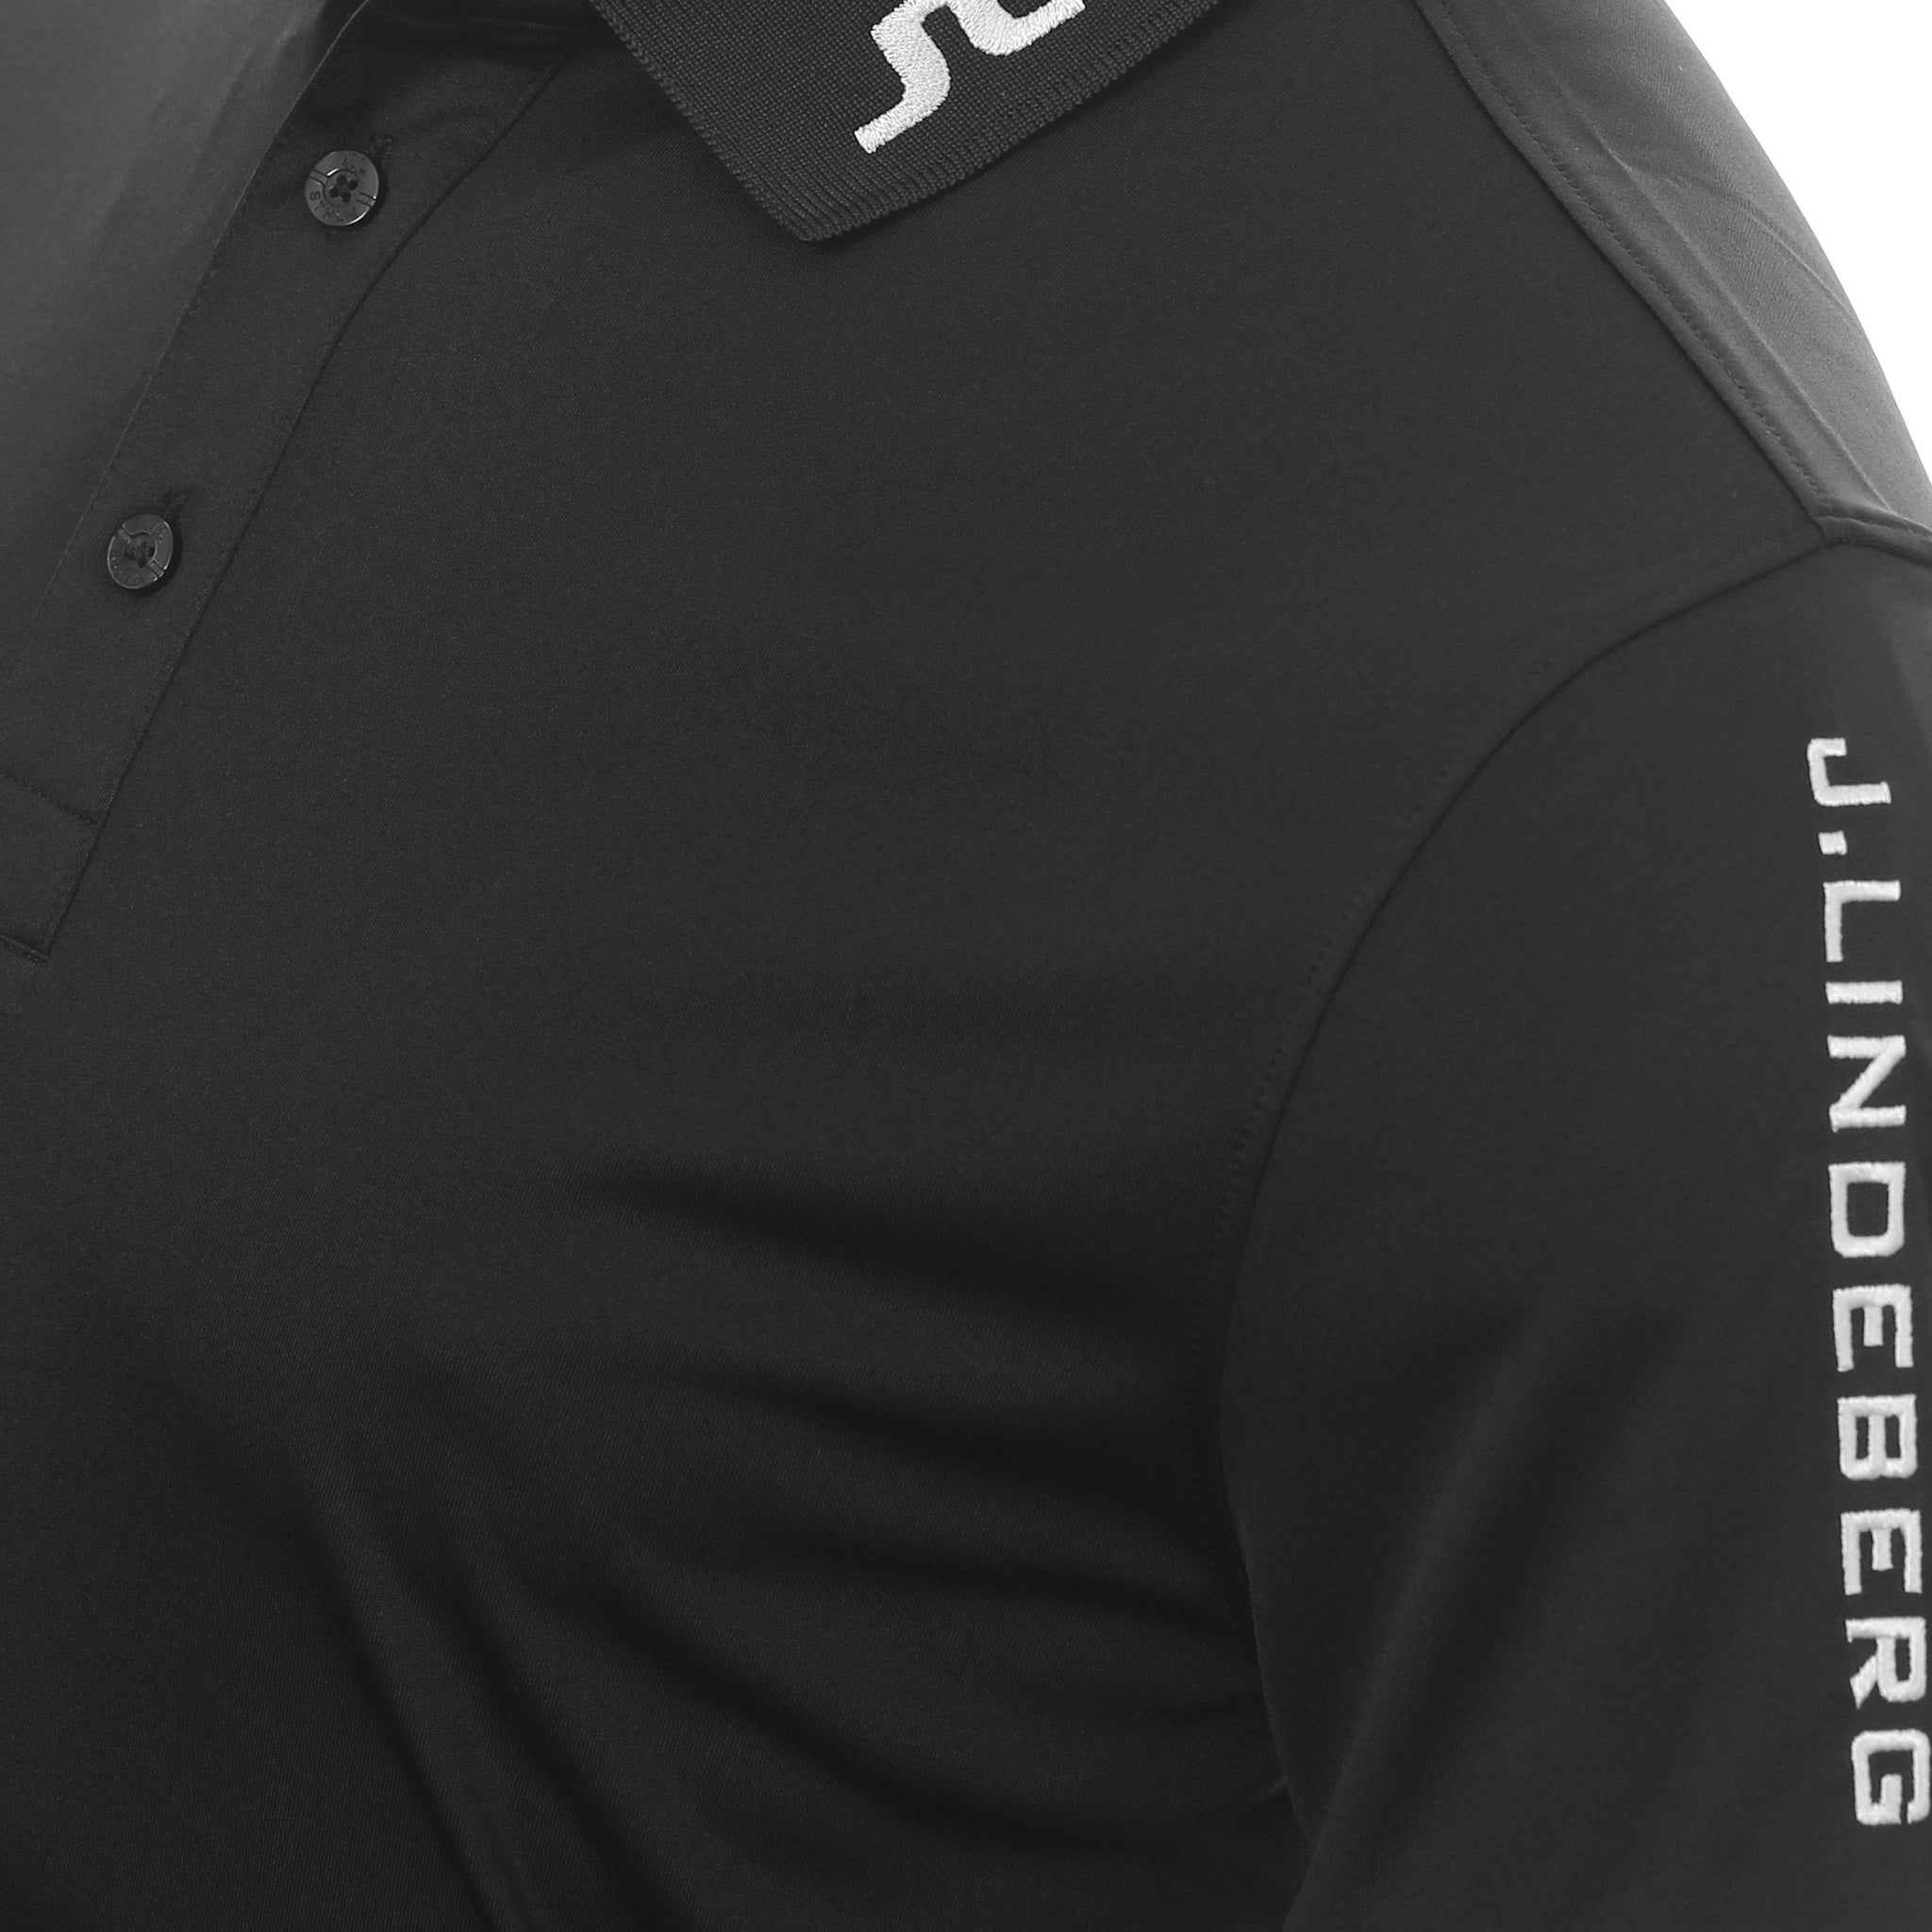 j-lindeberg-golf-tour-tech-polo-shirt-gmjt06337-9999-black